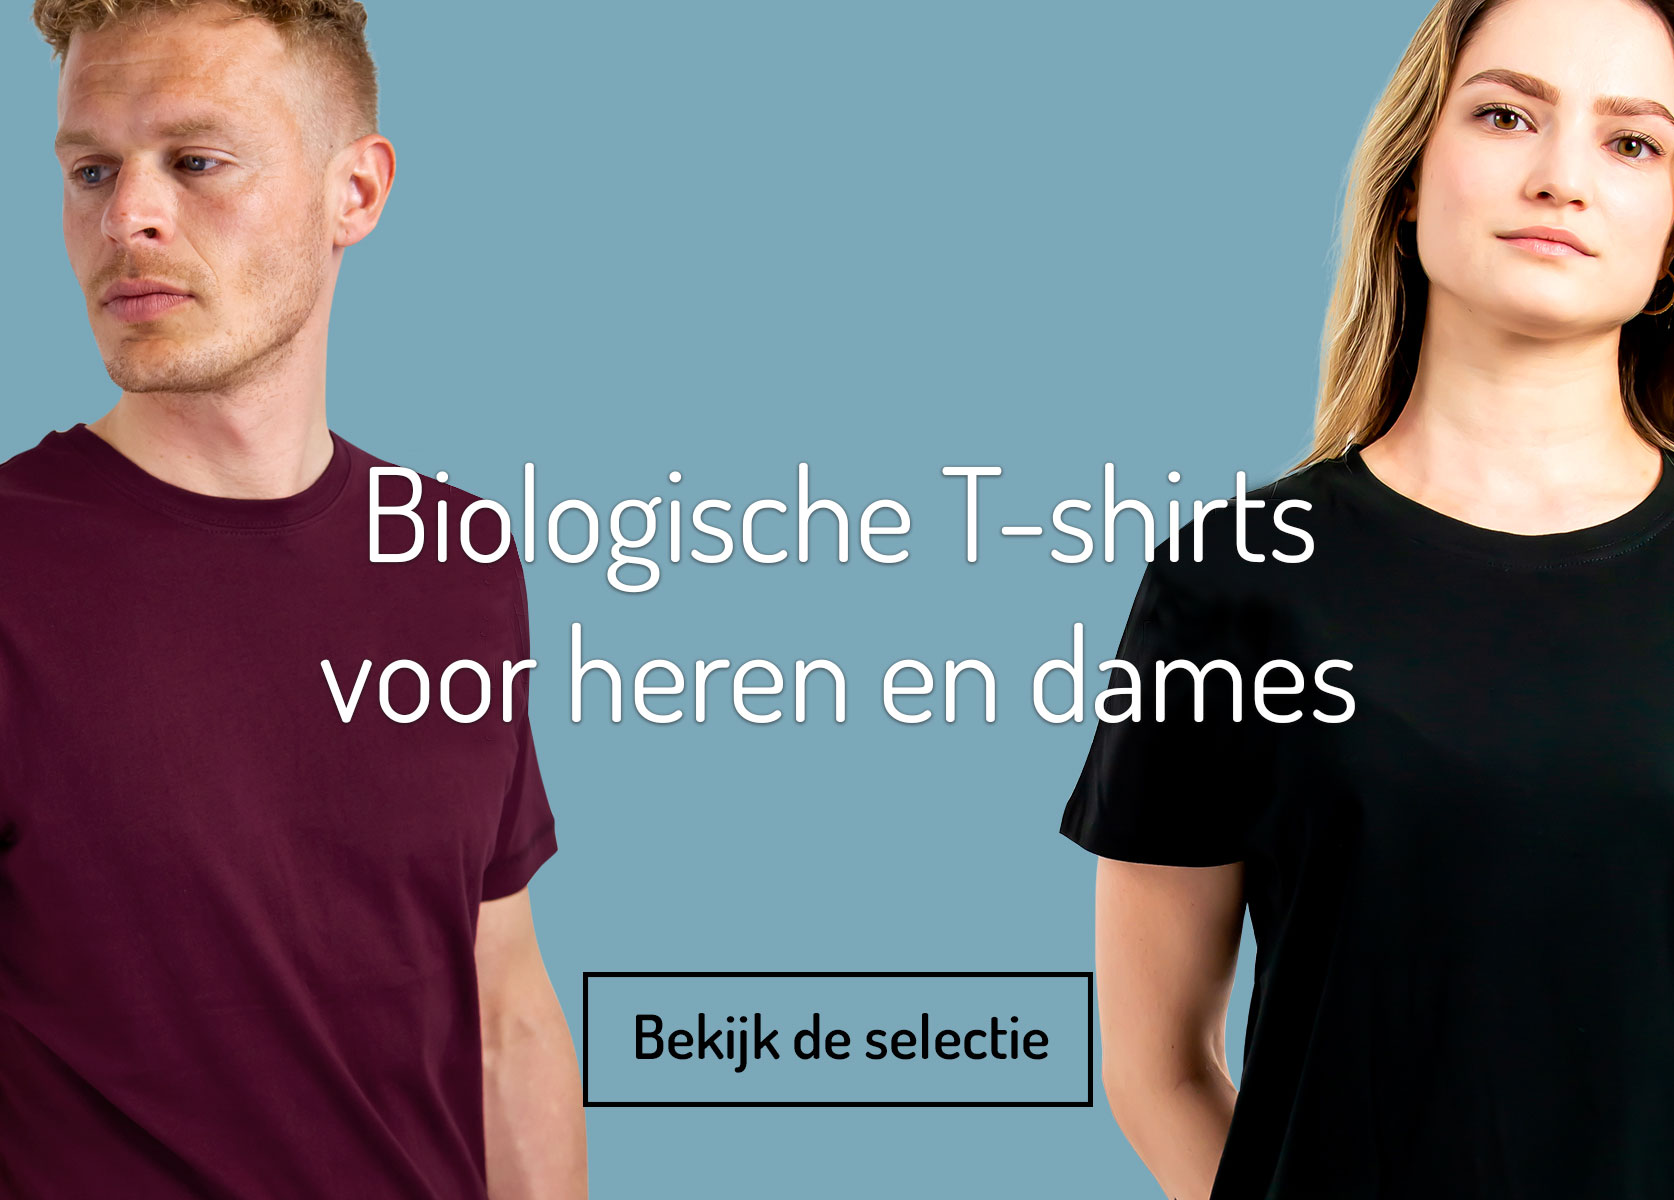 Biologische t-shirts